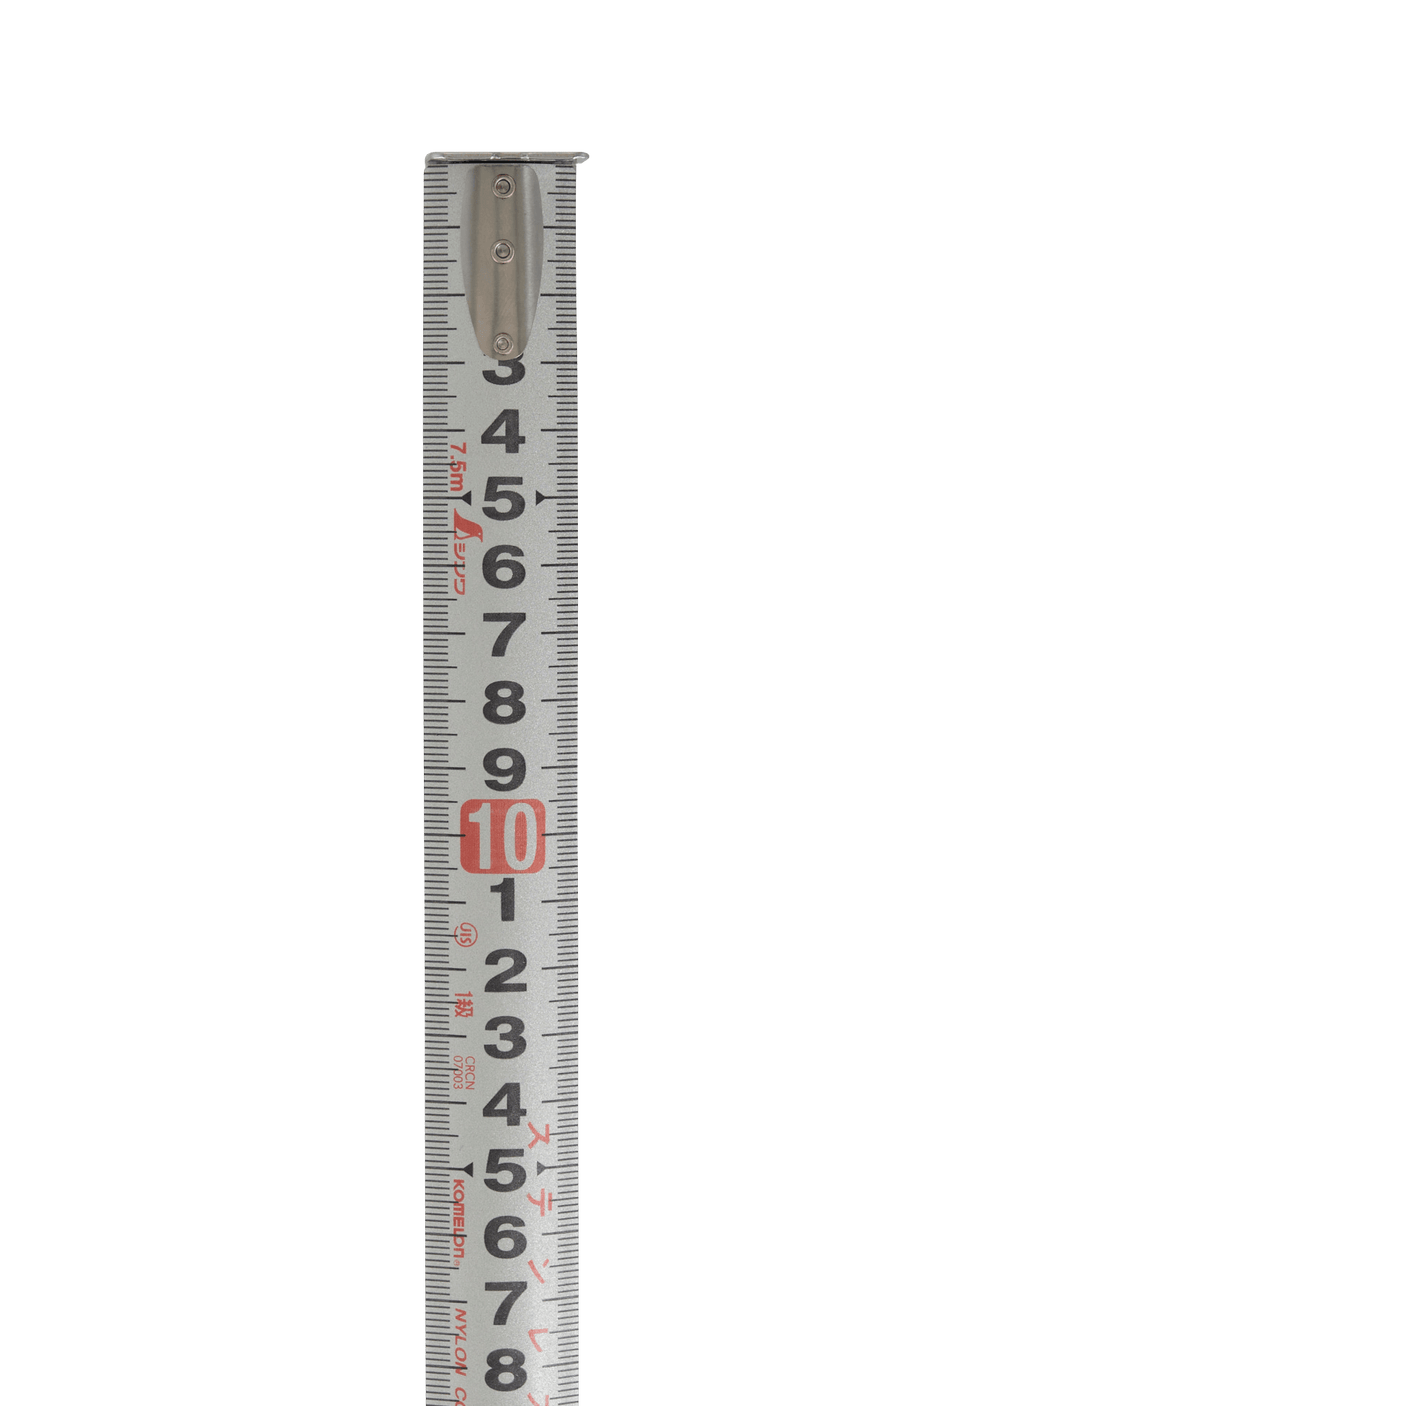 Tough Gear HG 7.5m Measuring Tape (Stainless) - Measuring Tapes - Japanese Tools Australia